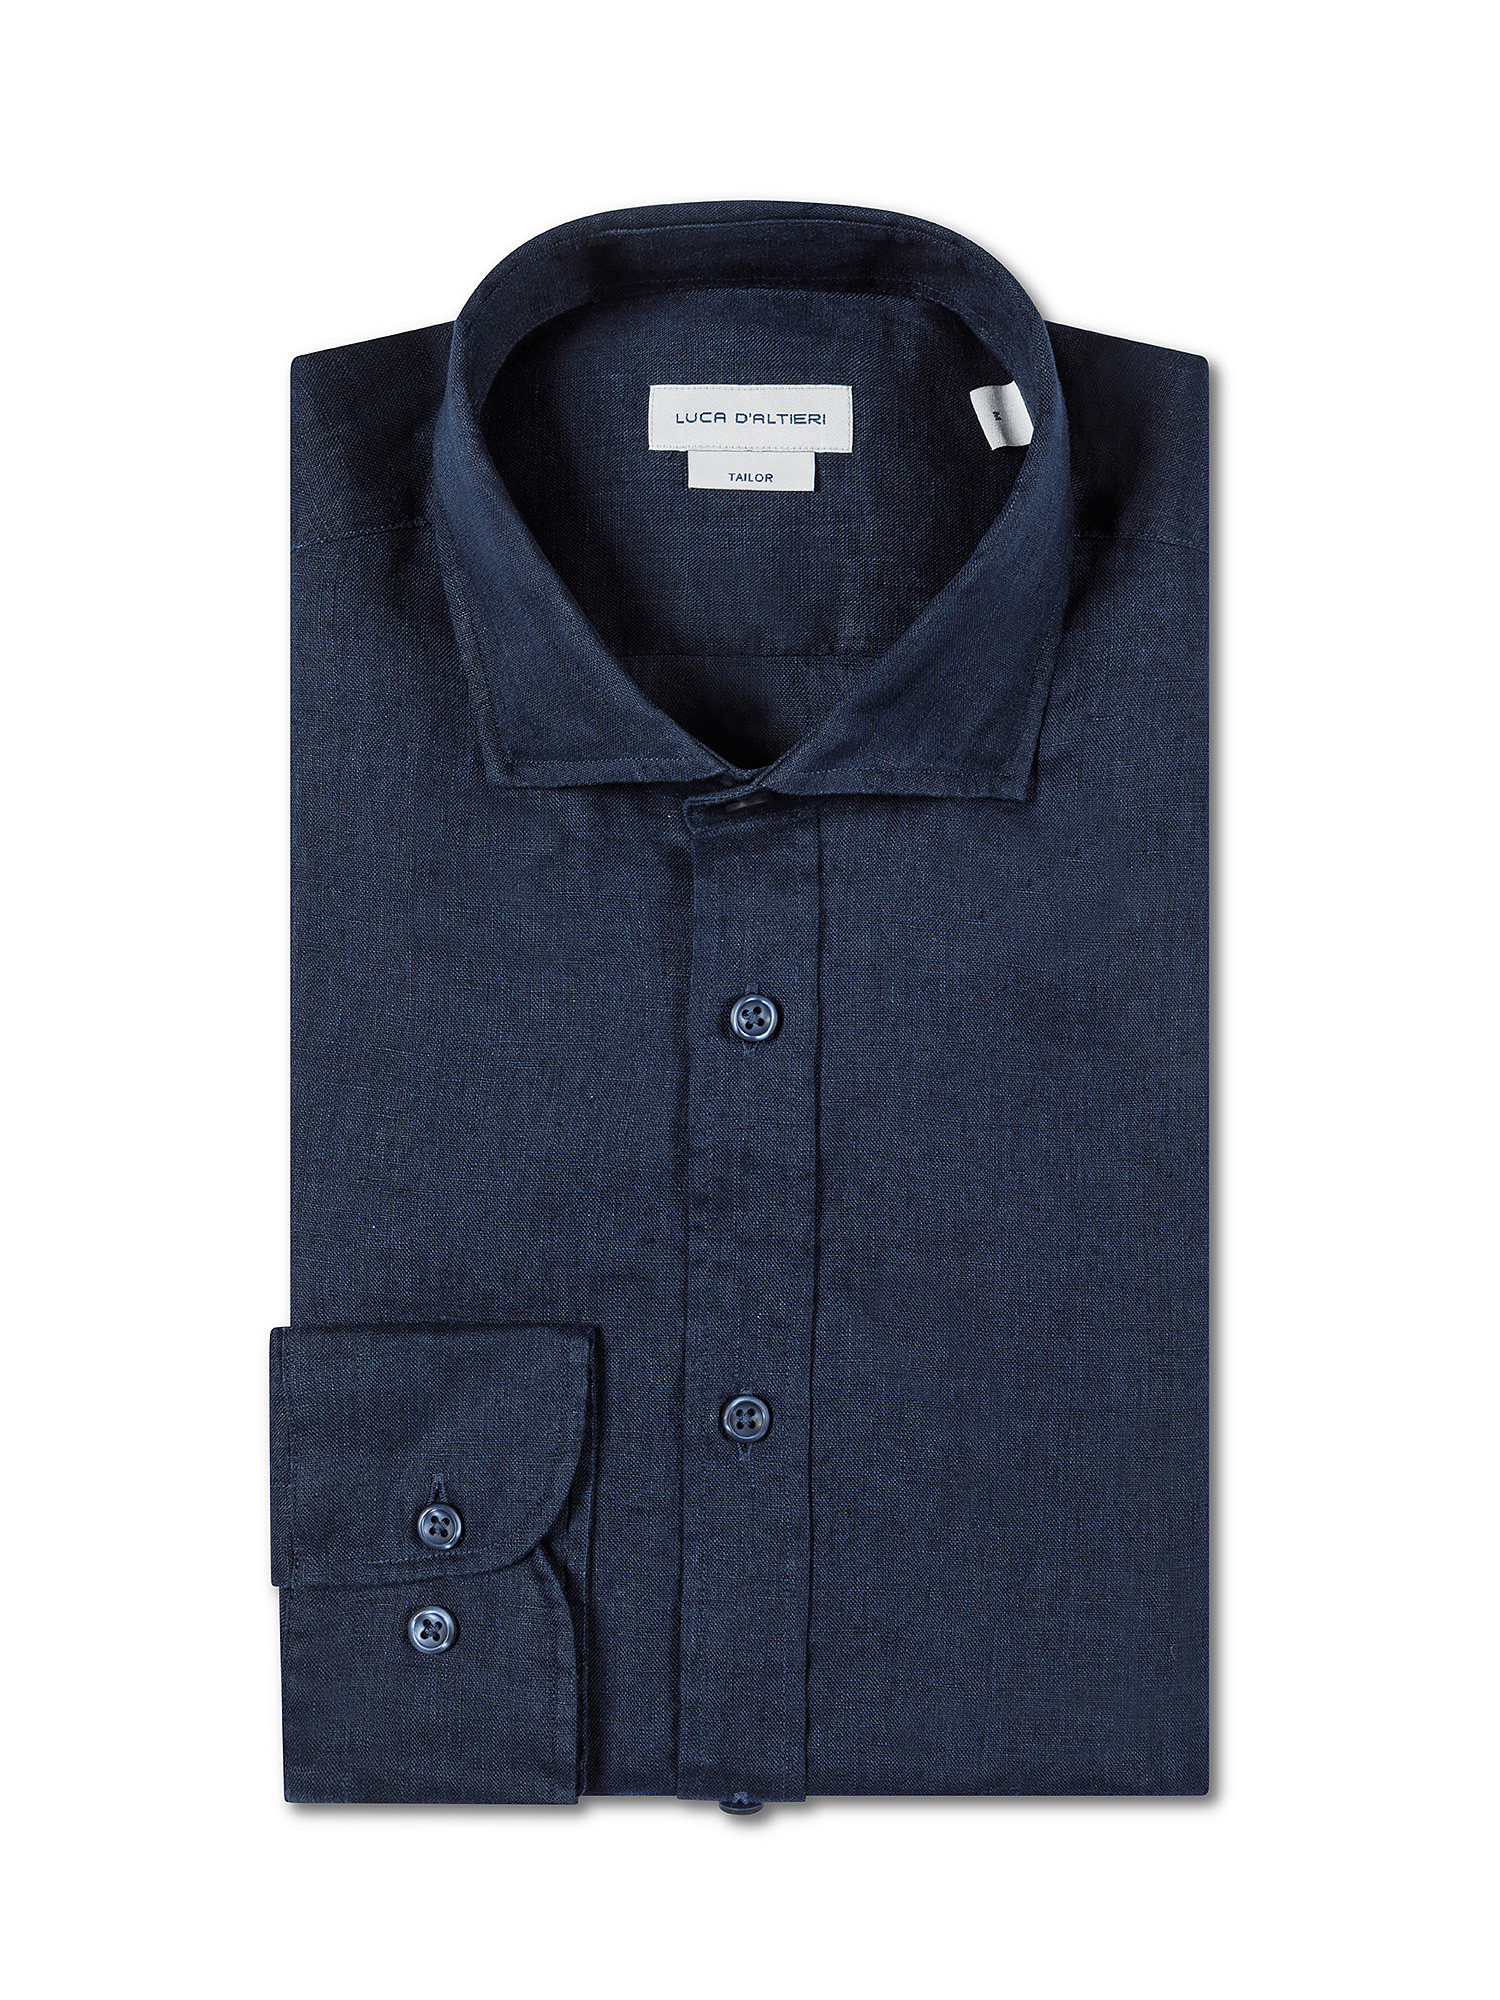 Luca D'Altieri - Camicia tailor fit in puro lino, Blu scuro, large image number 2